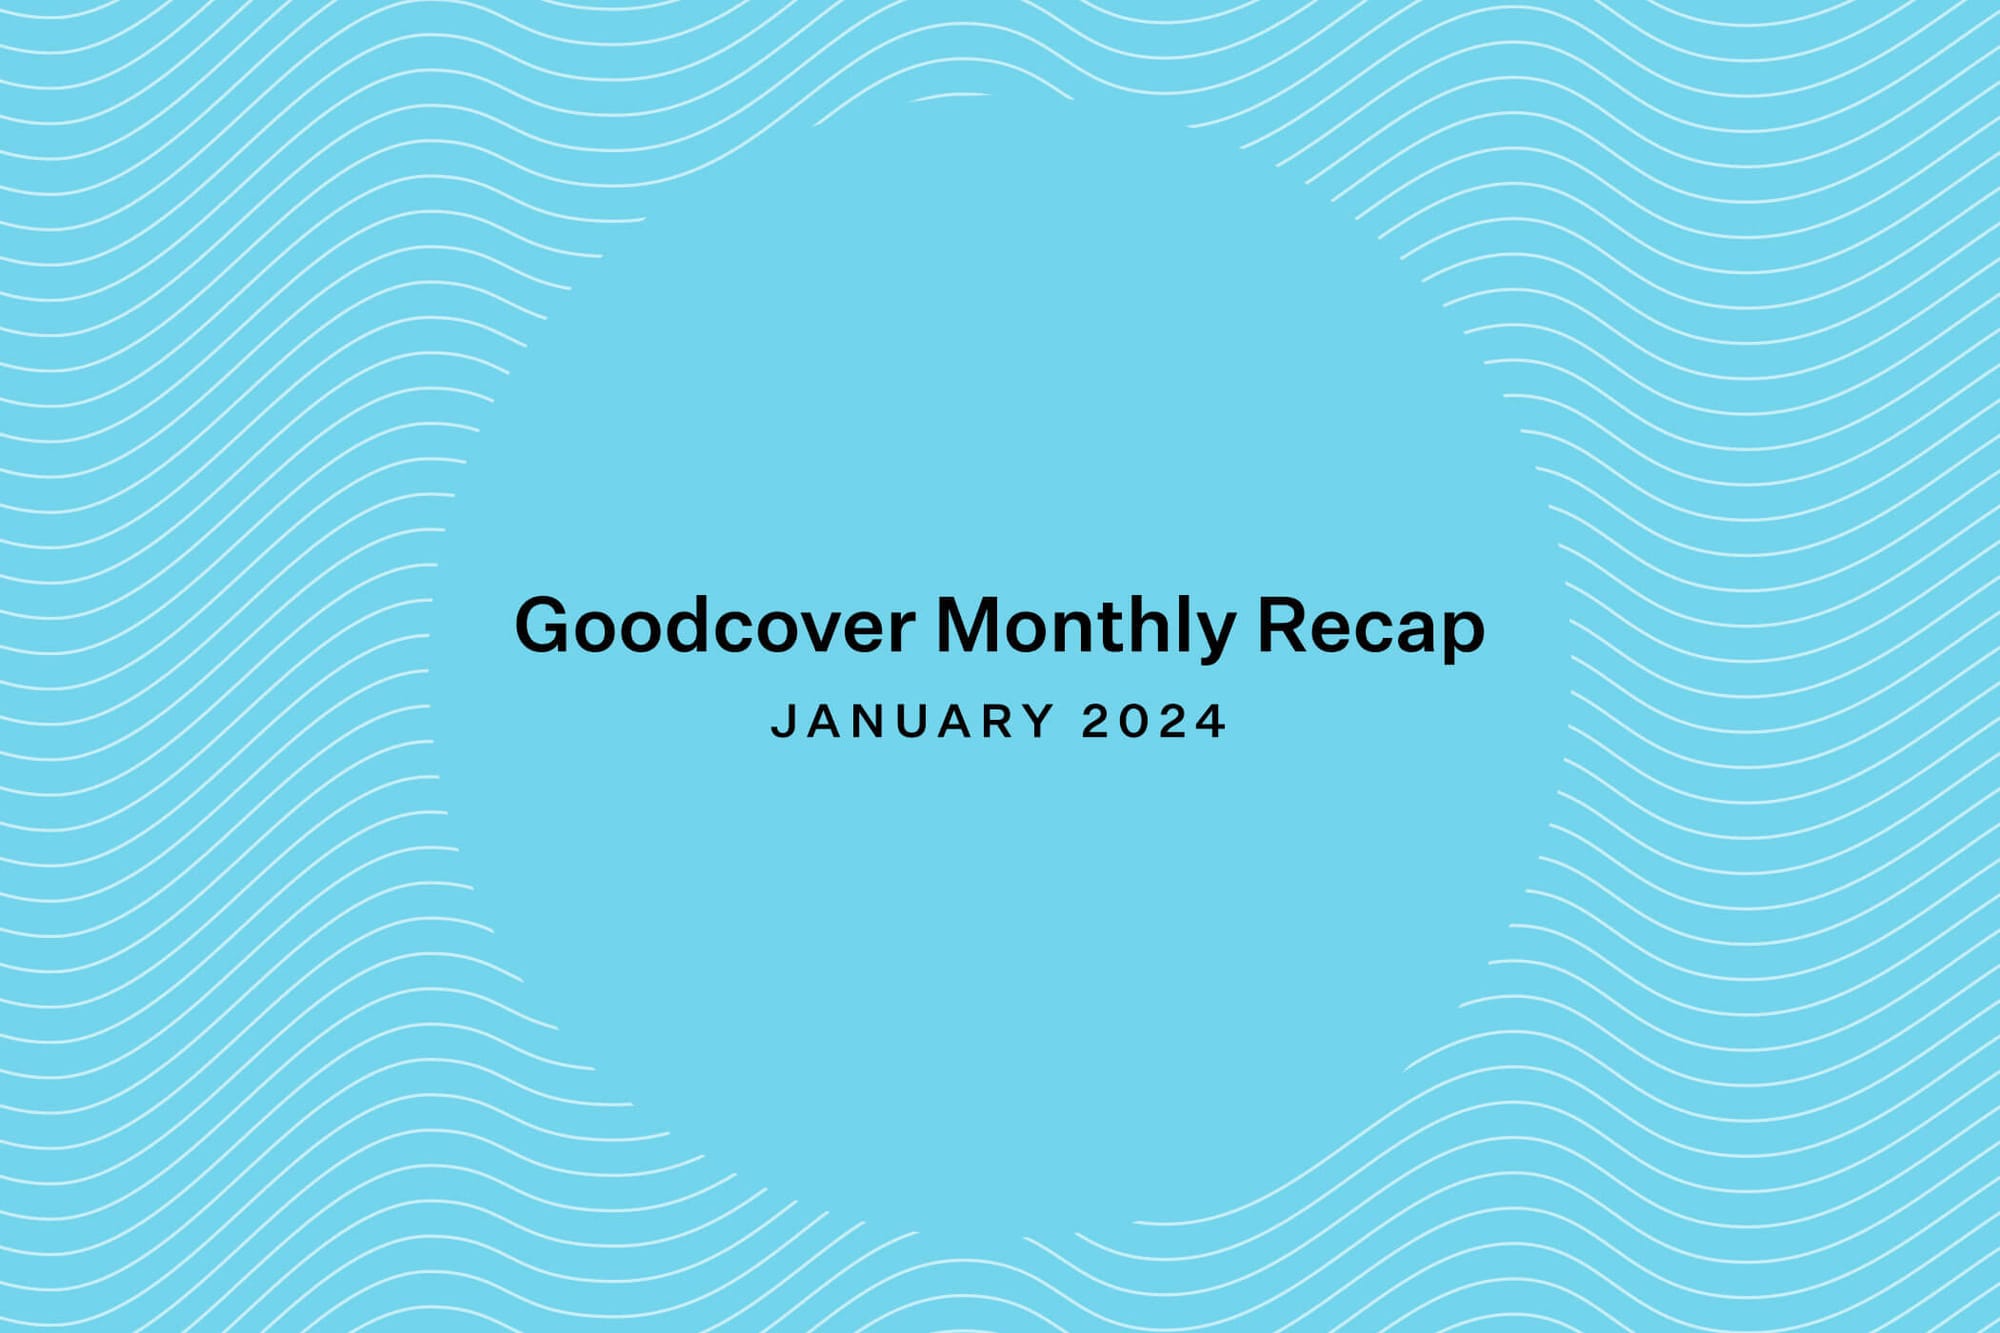 Goodcover Monthly News Recap